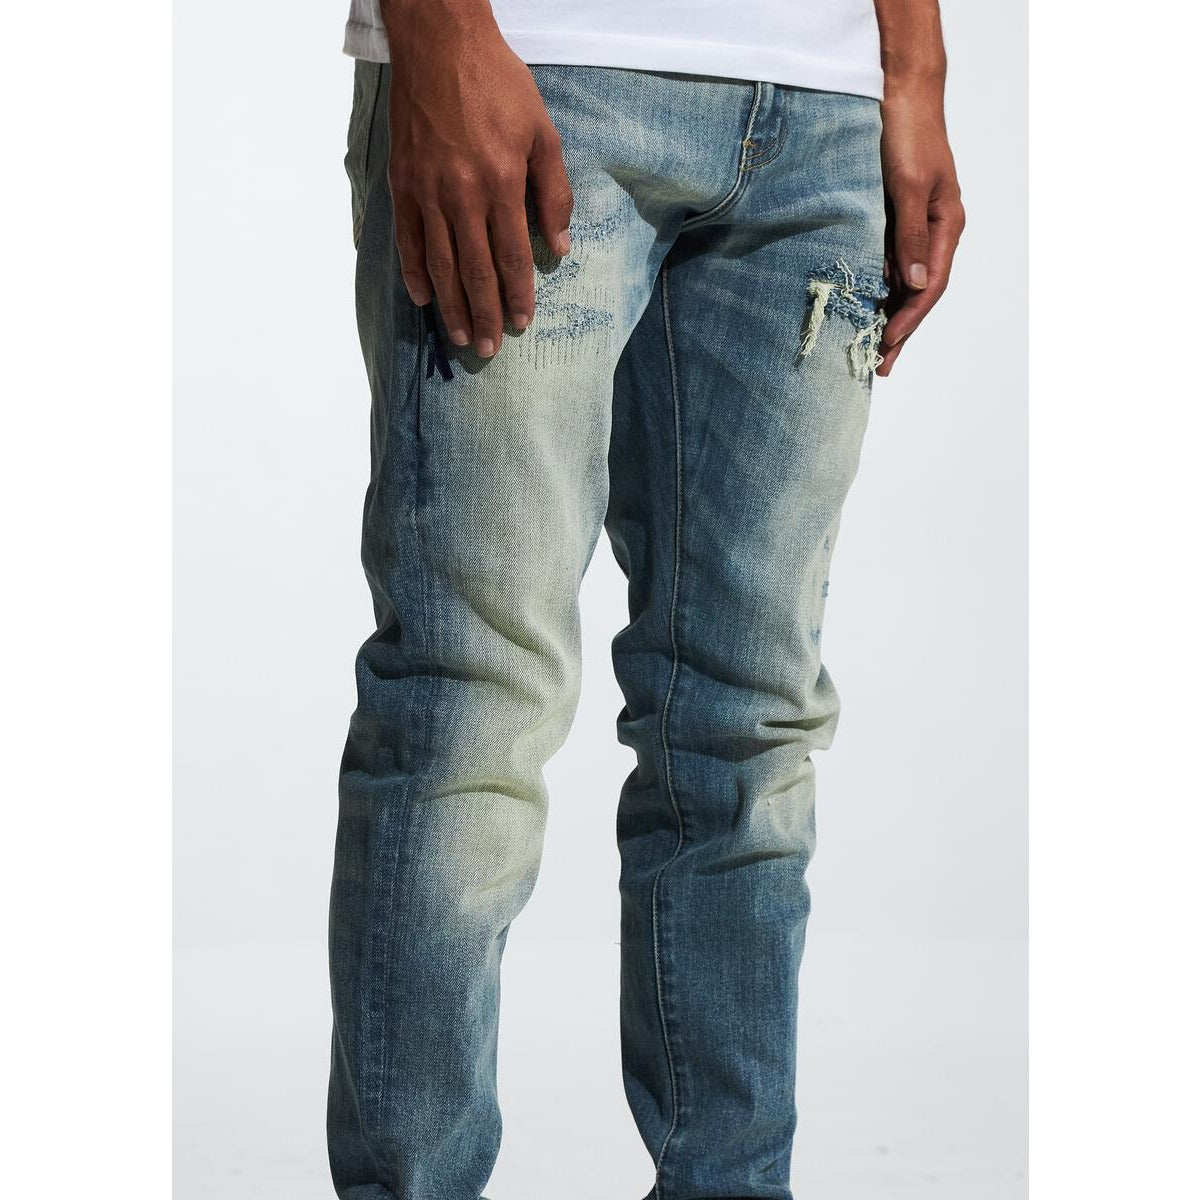 Crysp Denim Atlantic Sand Stitch Jeans (CRYF222-205)